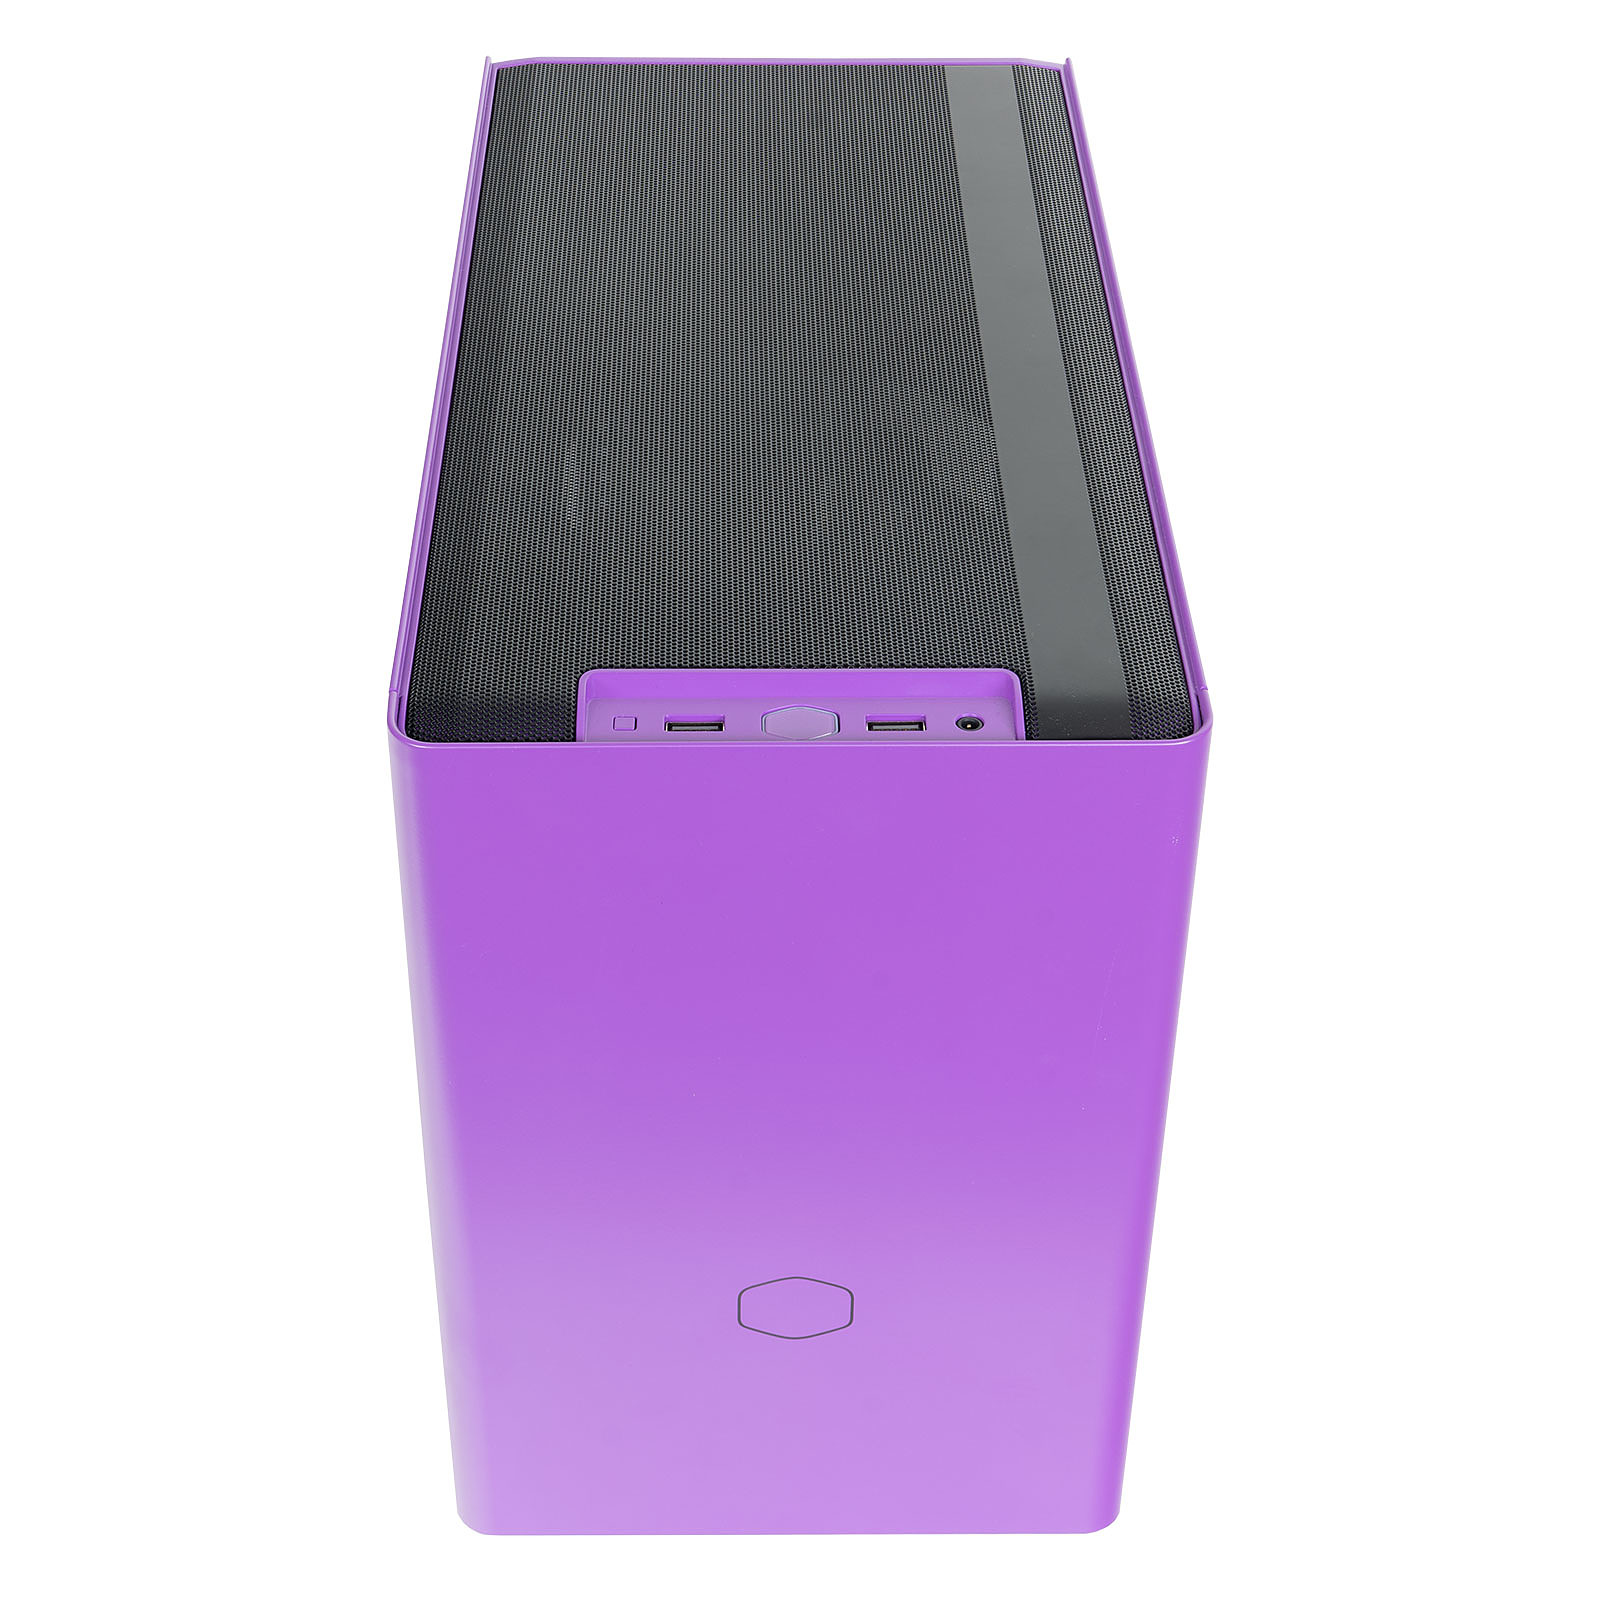 MasterBox NR200P violet 2ans